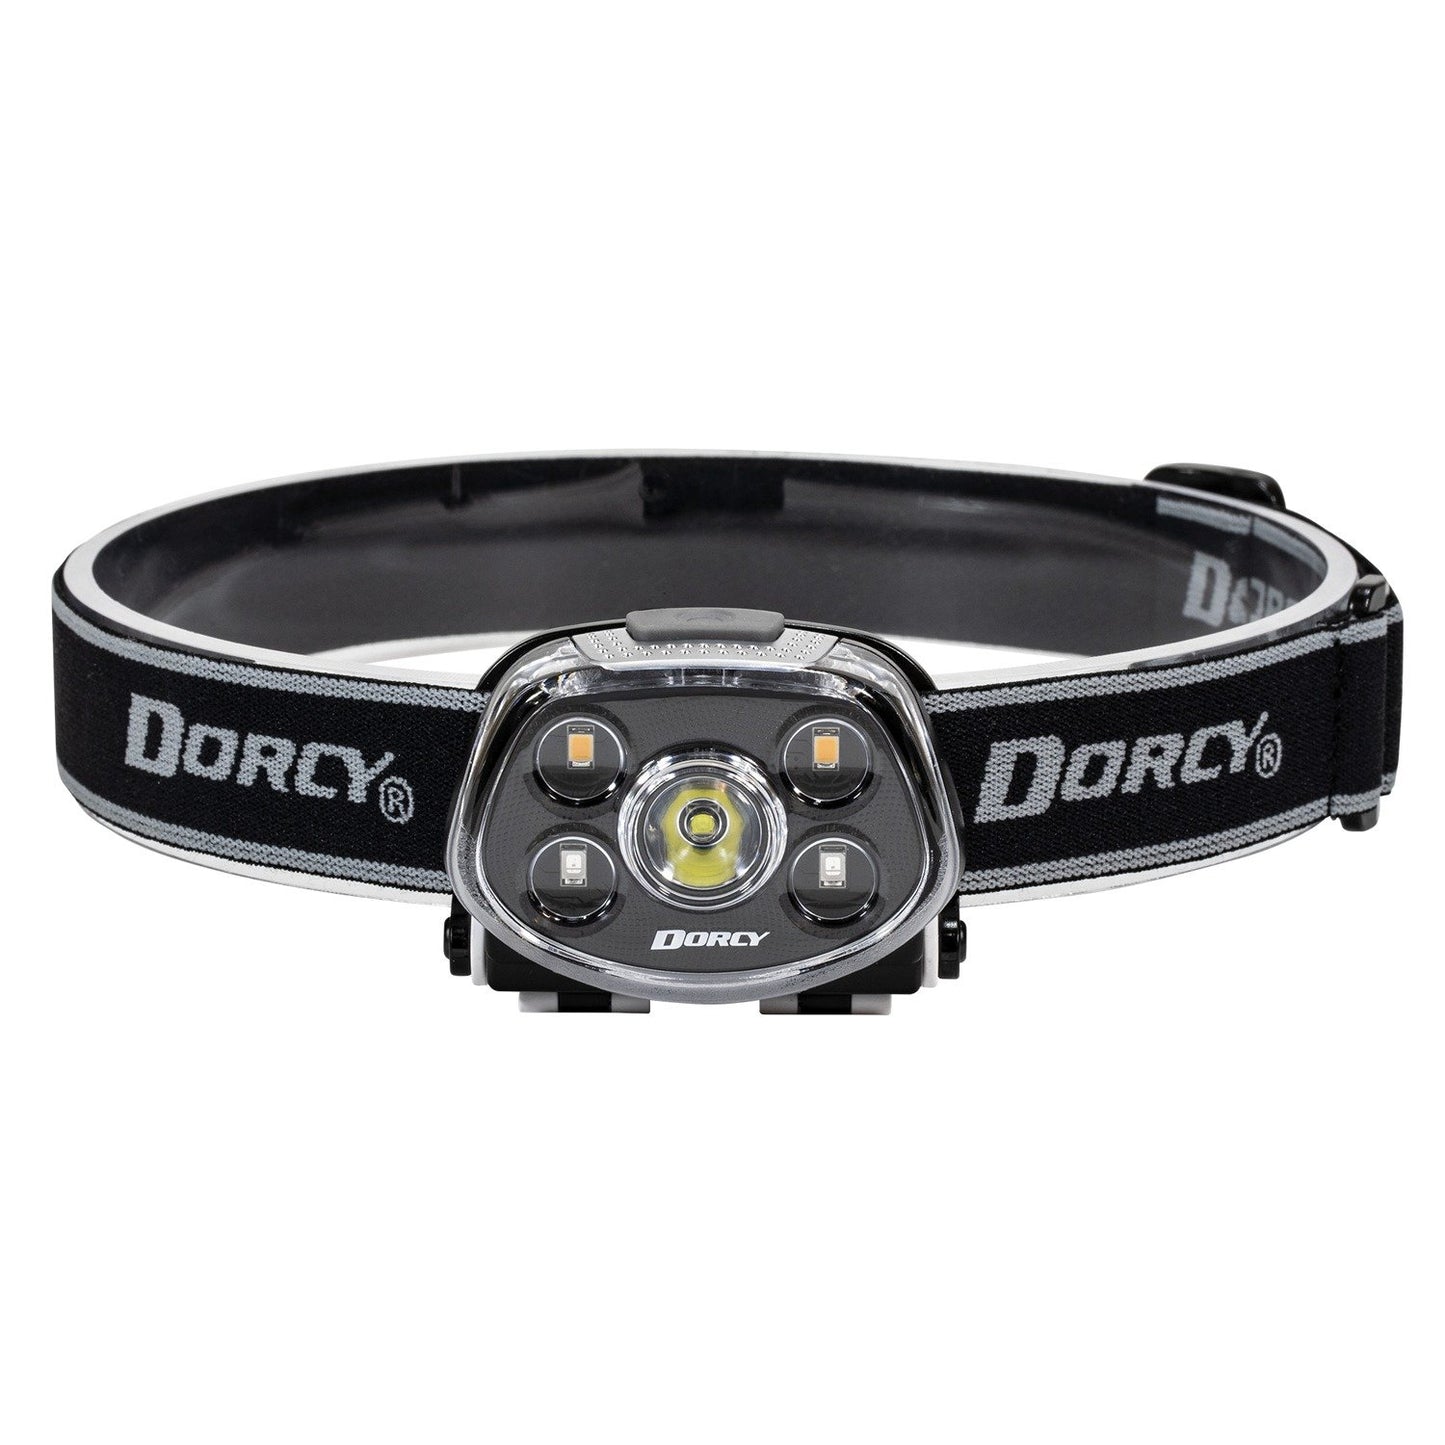 Dorcy 41-4320 Pro 470-Lumen LED High CRI and UV Tilting Headlamp